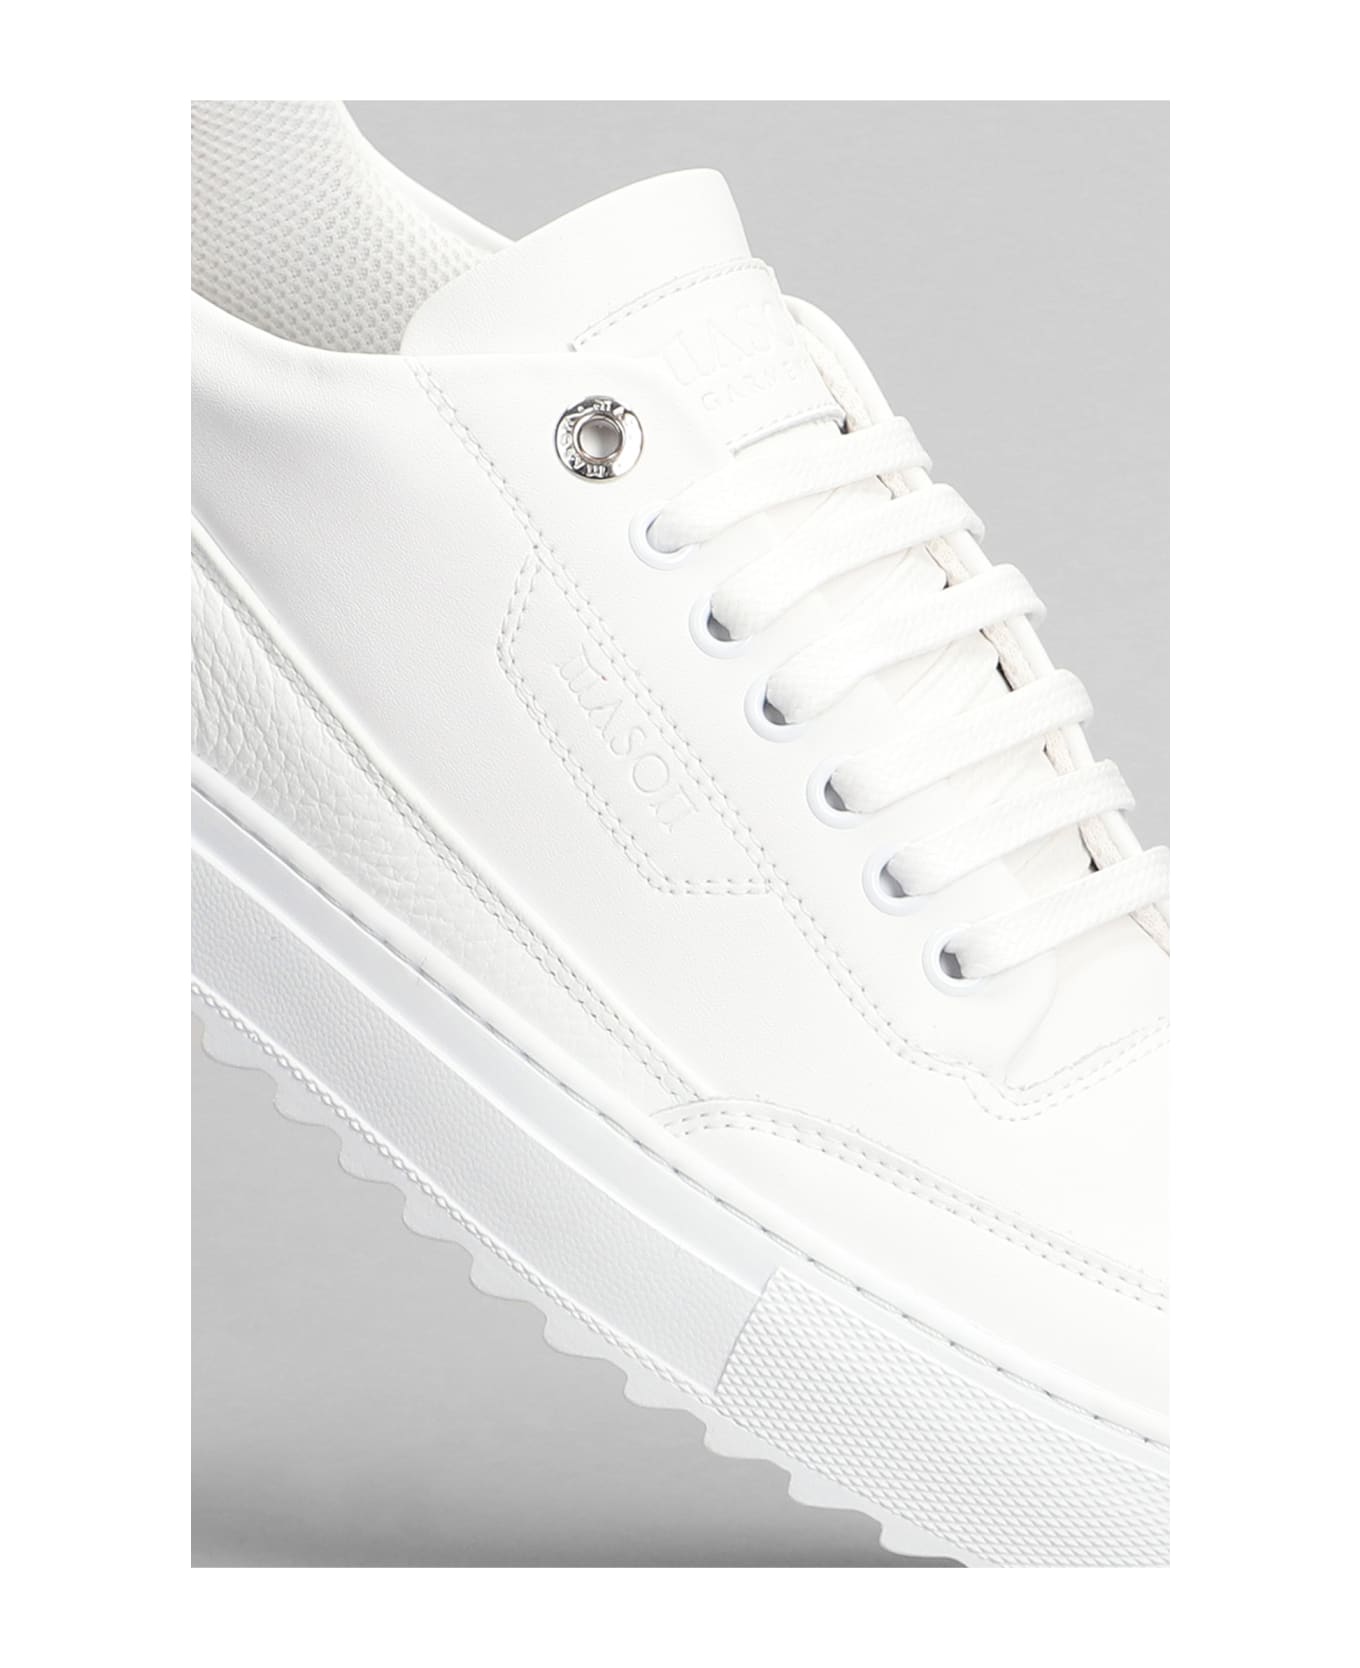 Mason Garments Torino Sneakers In White Leather - white スニーカー